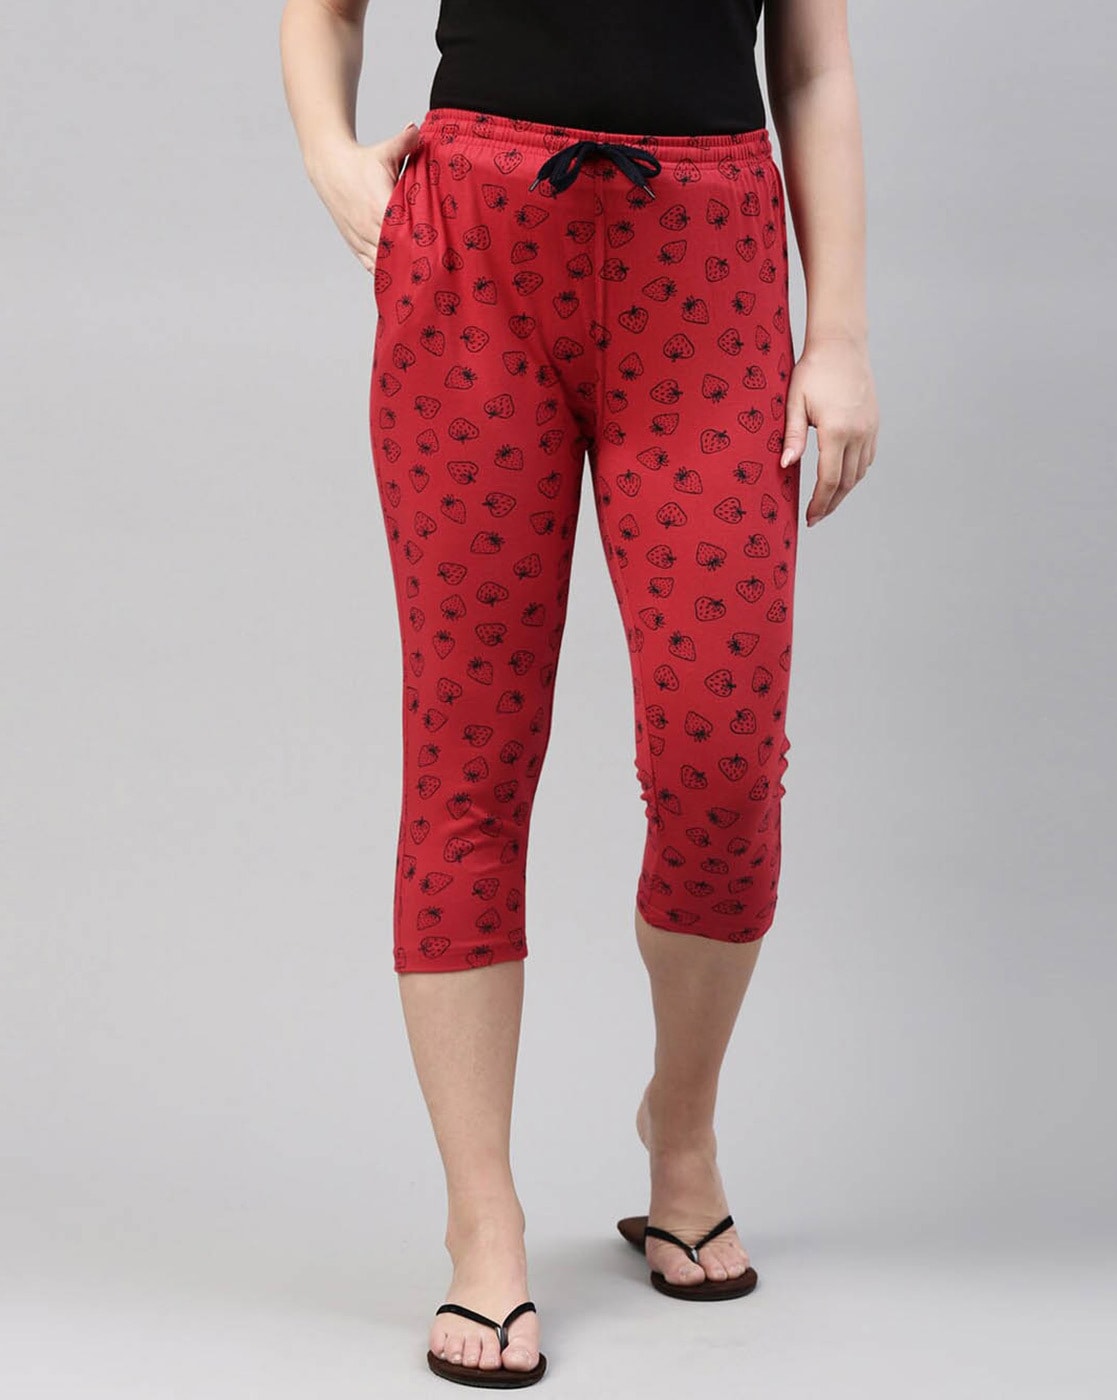 Buy Capri Pant for Women Knee Length M RED at Amazonin